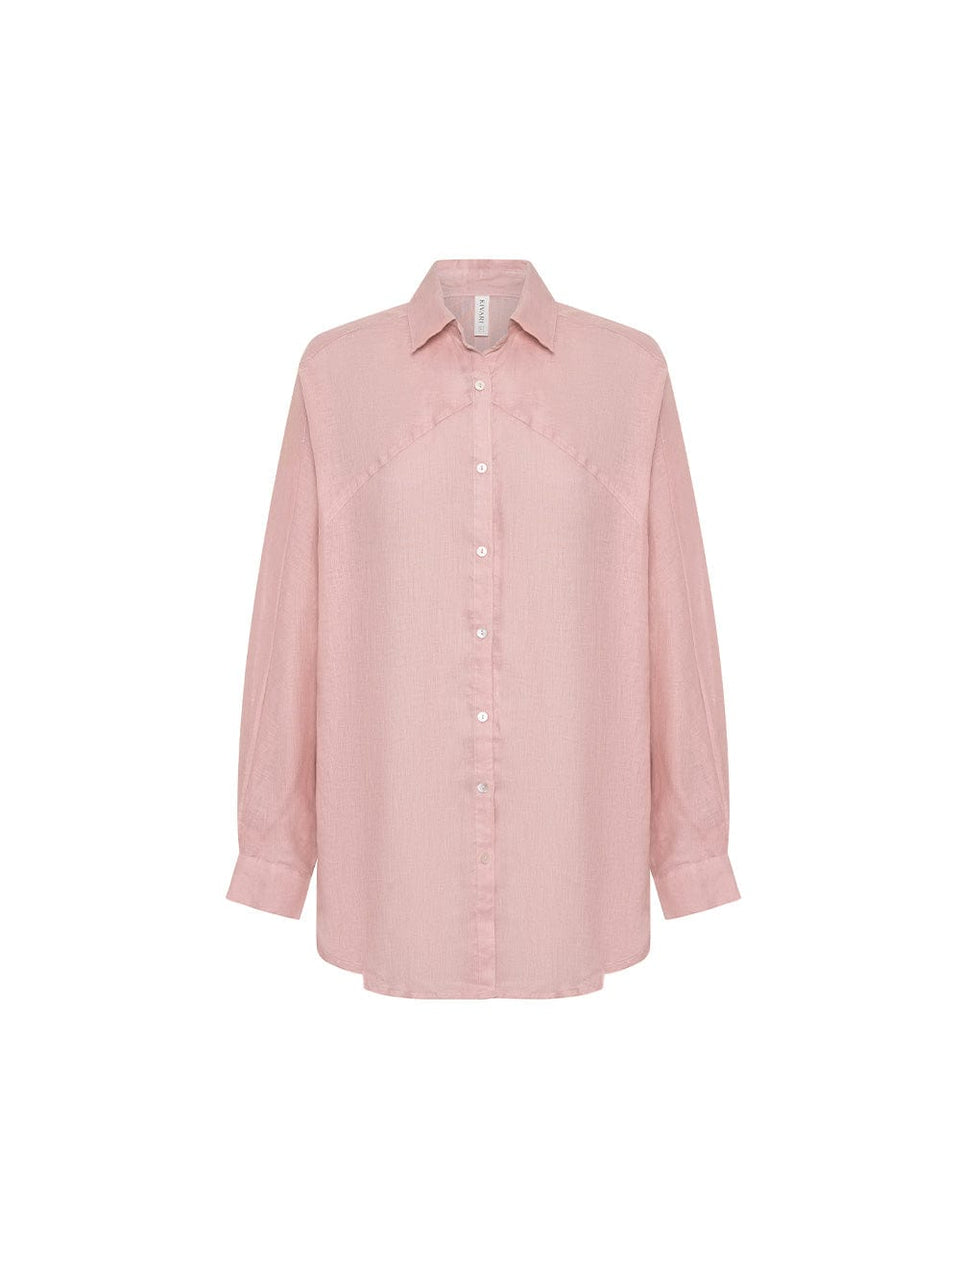 KIVARI Nikita Shirt | Dusty Pink Shirt